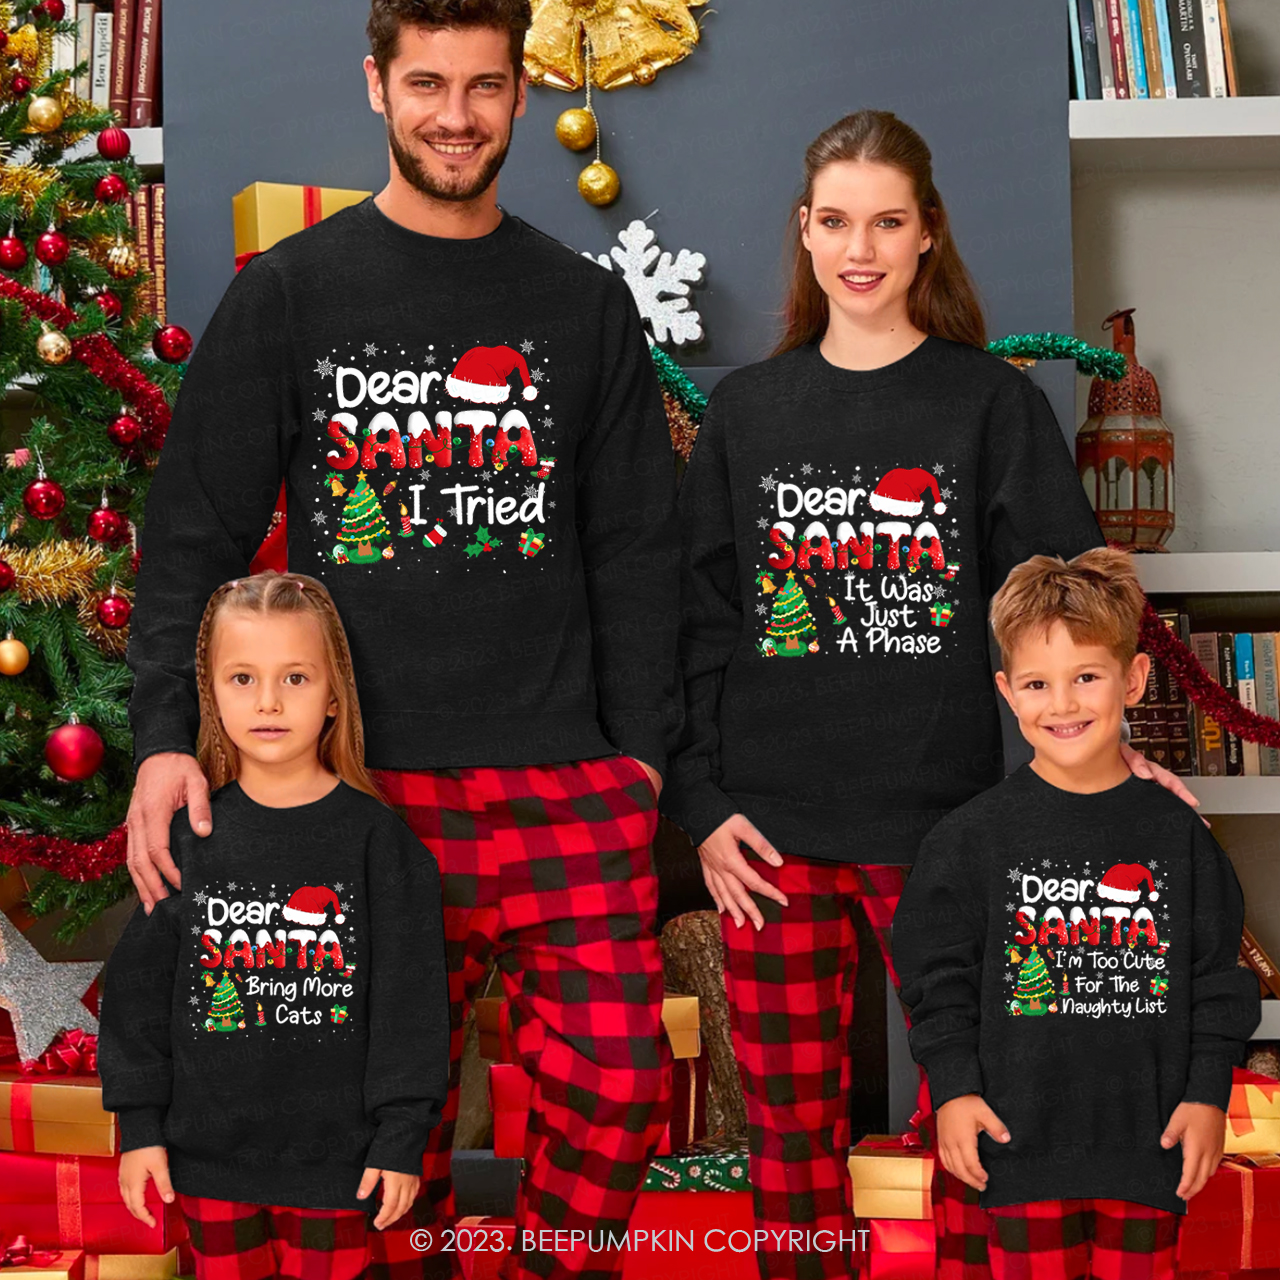 39 Quotes Christmas Sarcastic Dear Santa Group Sweatshirts